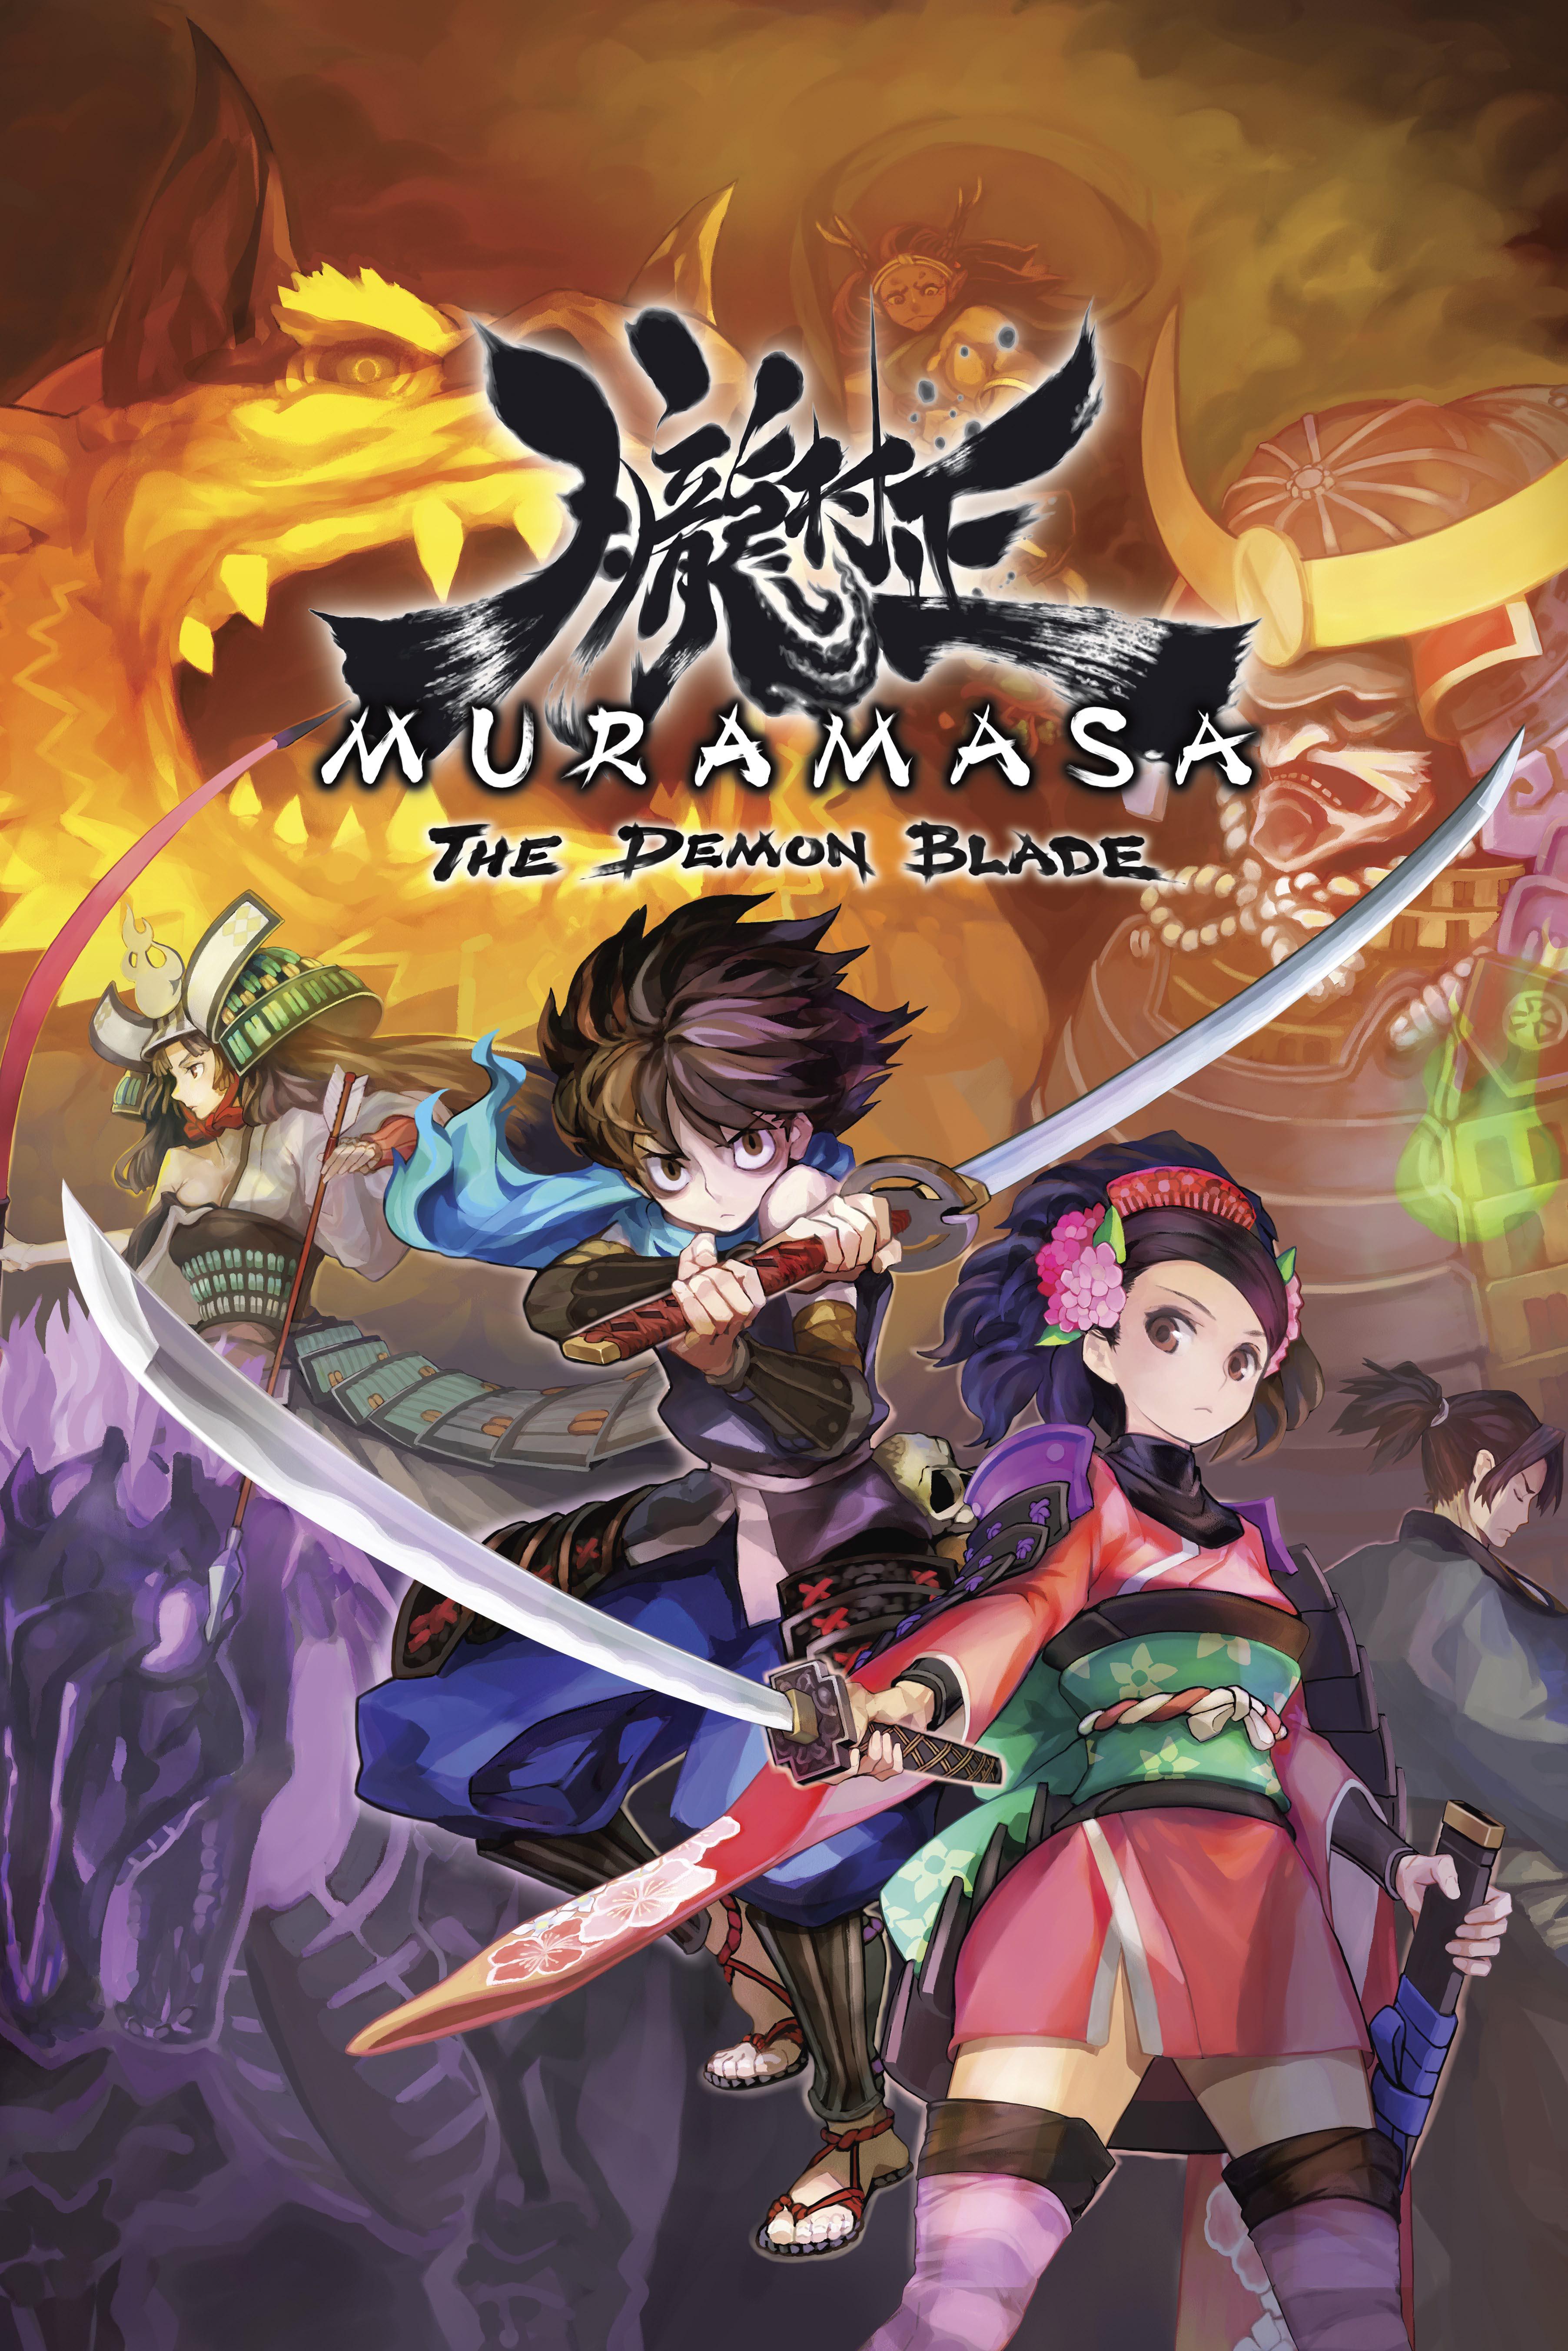 Muramasa: The Demon Blade screenshots, image and picture